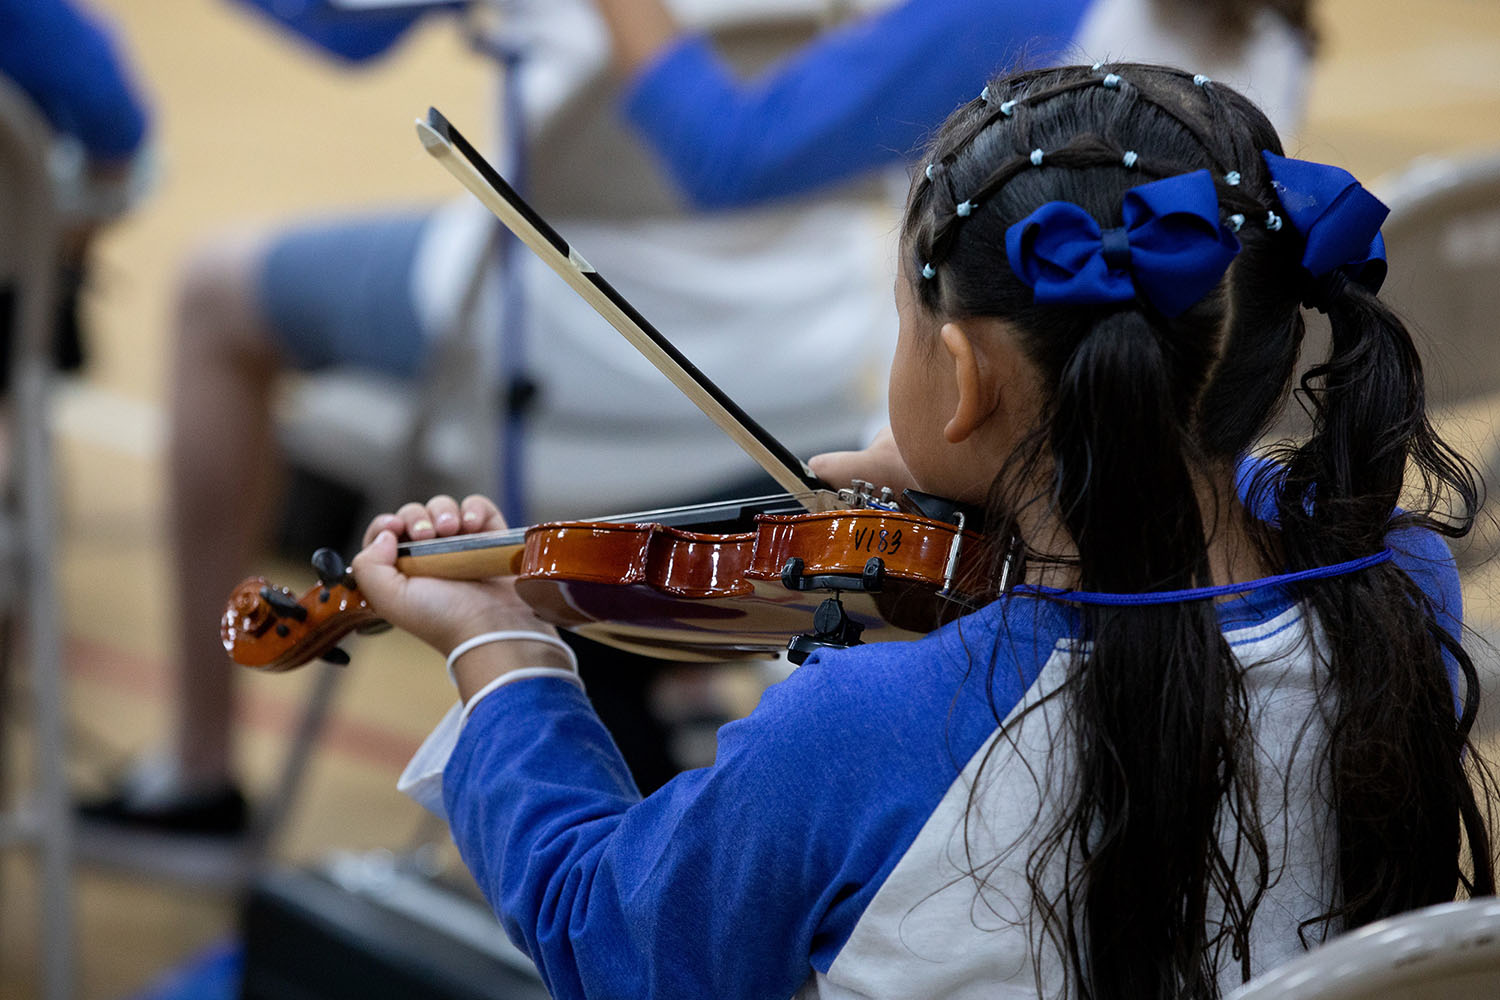 Scientists, Symphony To Conduct Music, Brain Development Study